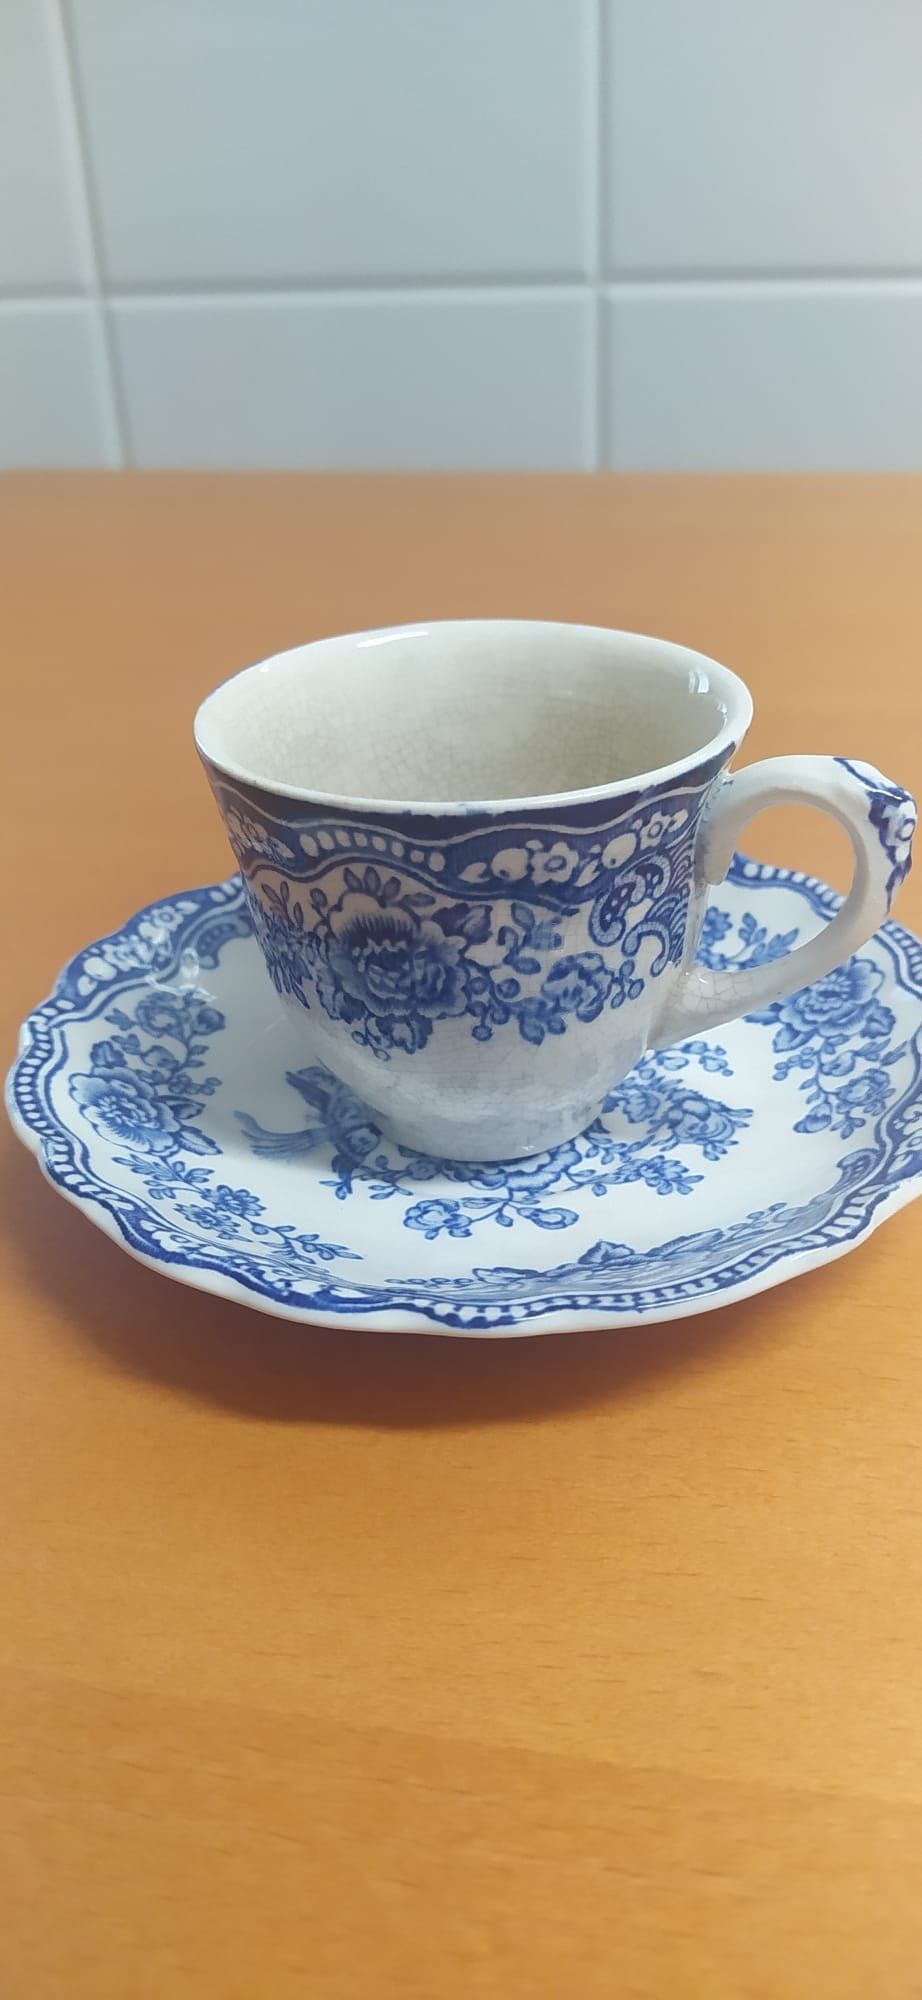 Chávena Antiga/Vintage de Café de Coleção "Bristol" by Crown Ducal